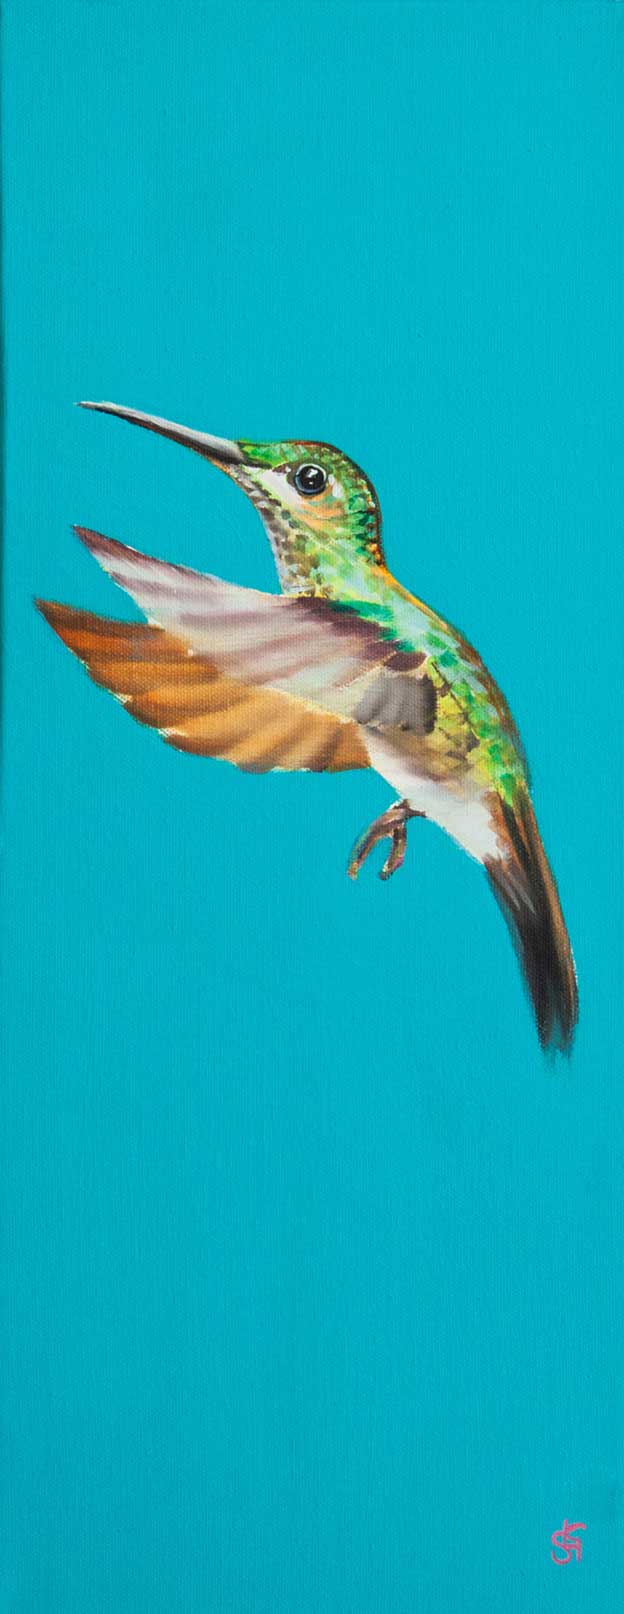 Sarah Graham's Colourful Acrylic Paintings Of Birds